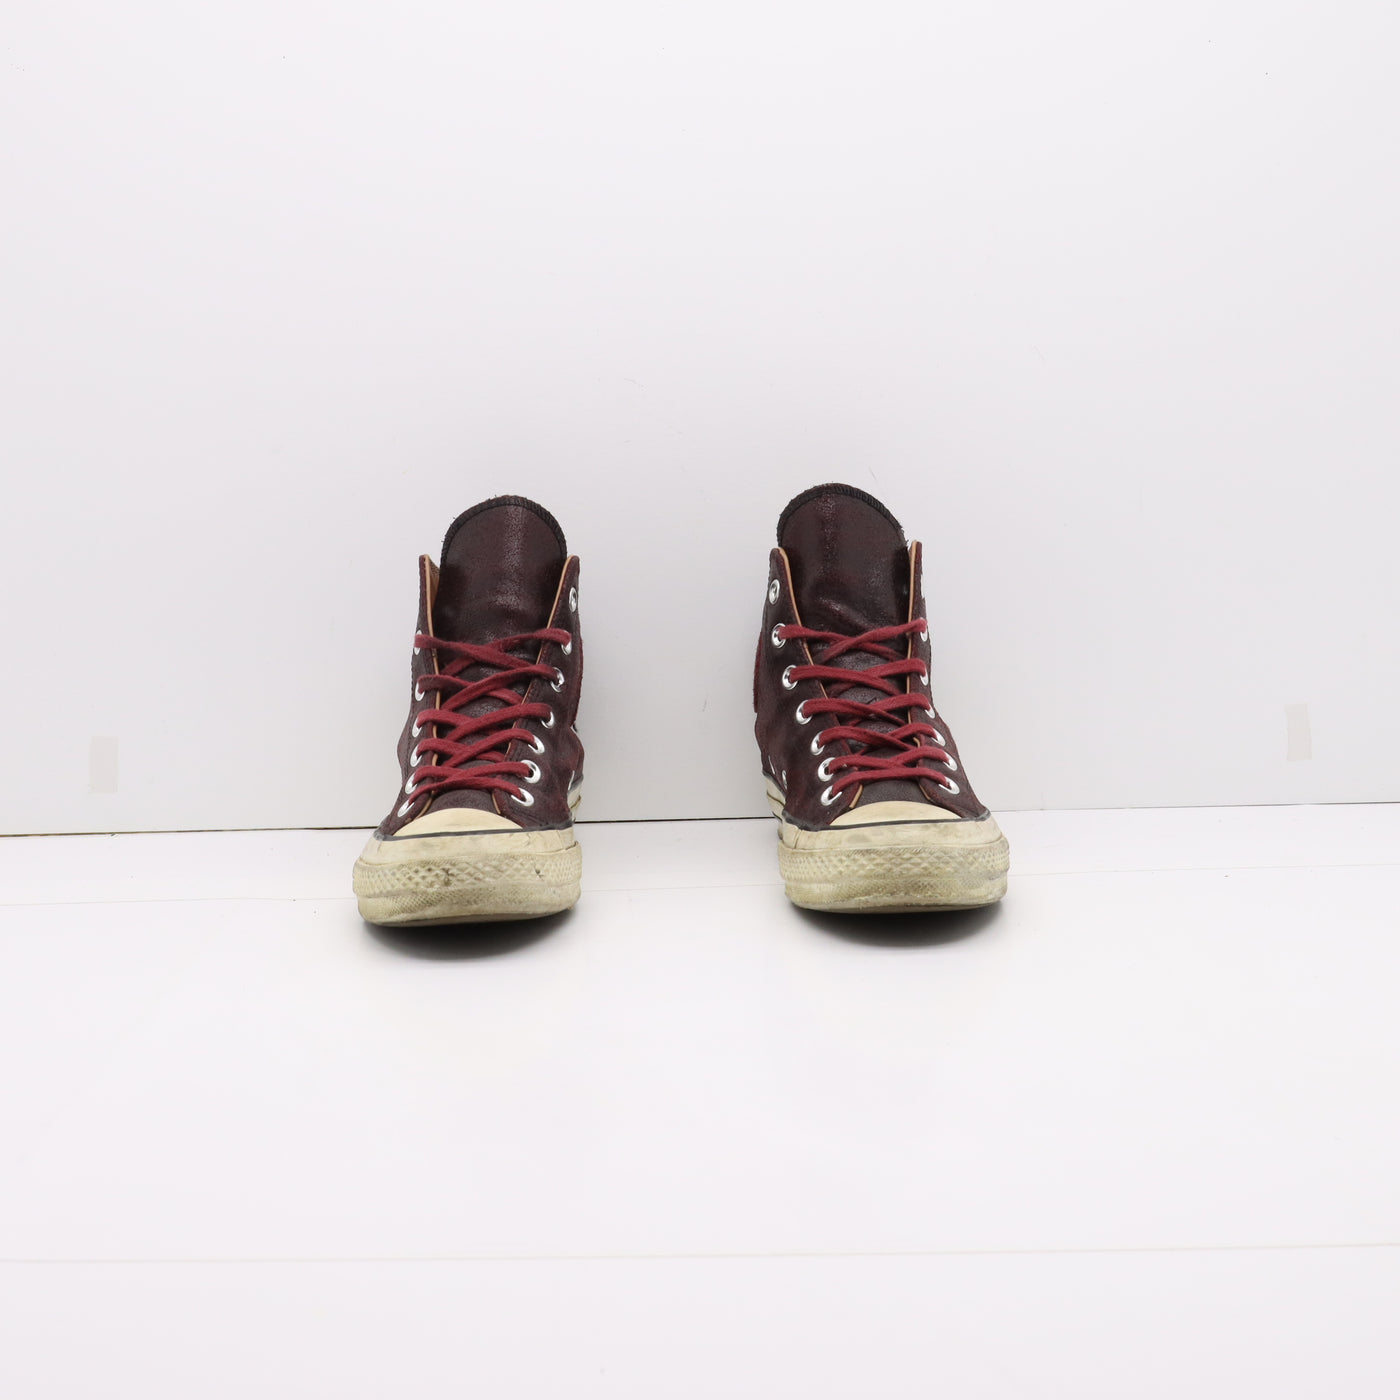 Converse All Star Chuck Taylor Atletich Shoes 70' Alte Rosso Carminio Eur 37.5 Unisex Vintage